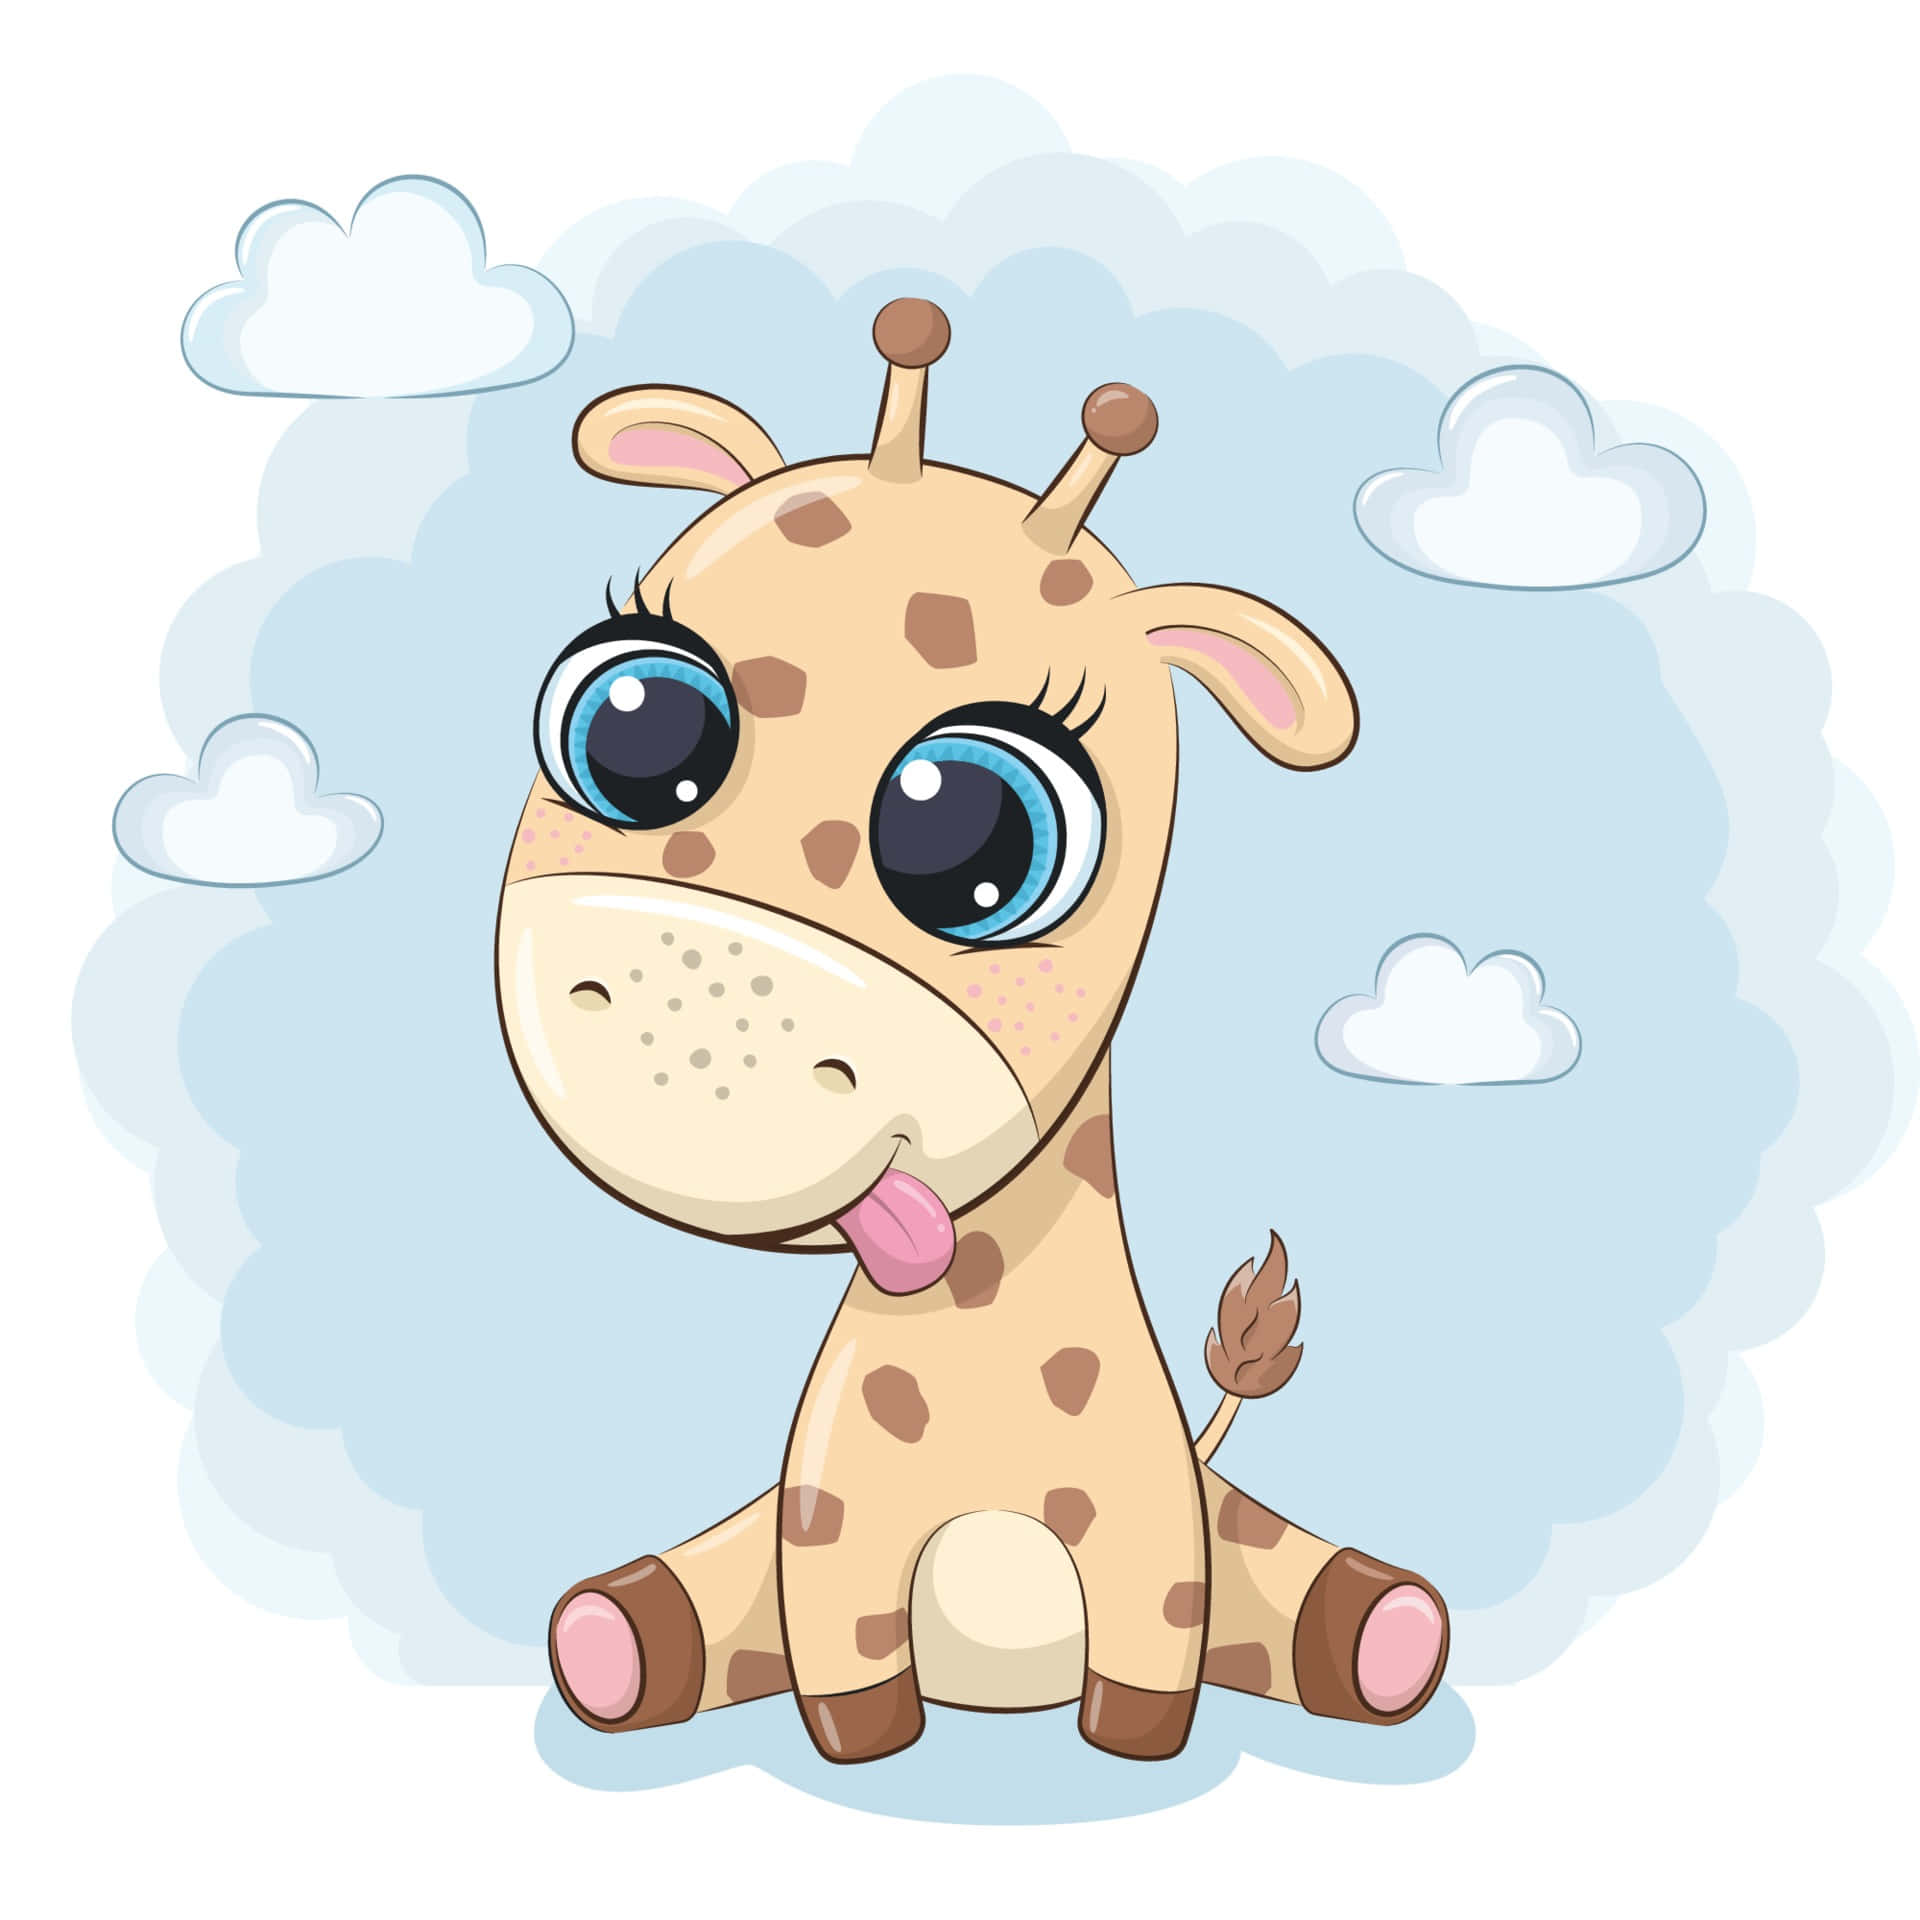 A Baby Giraffe seen at the local zoo